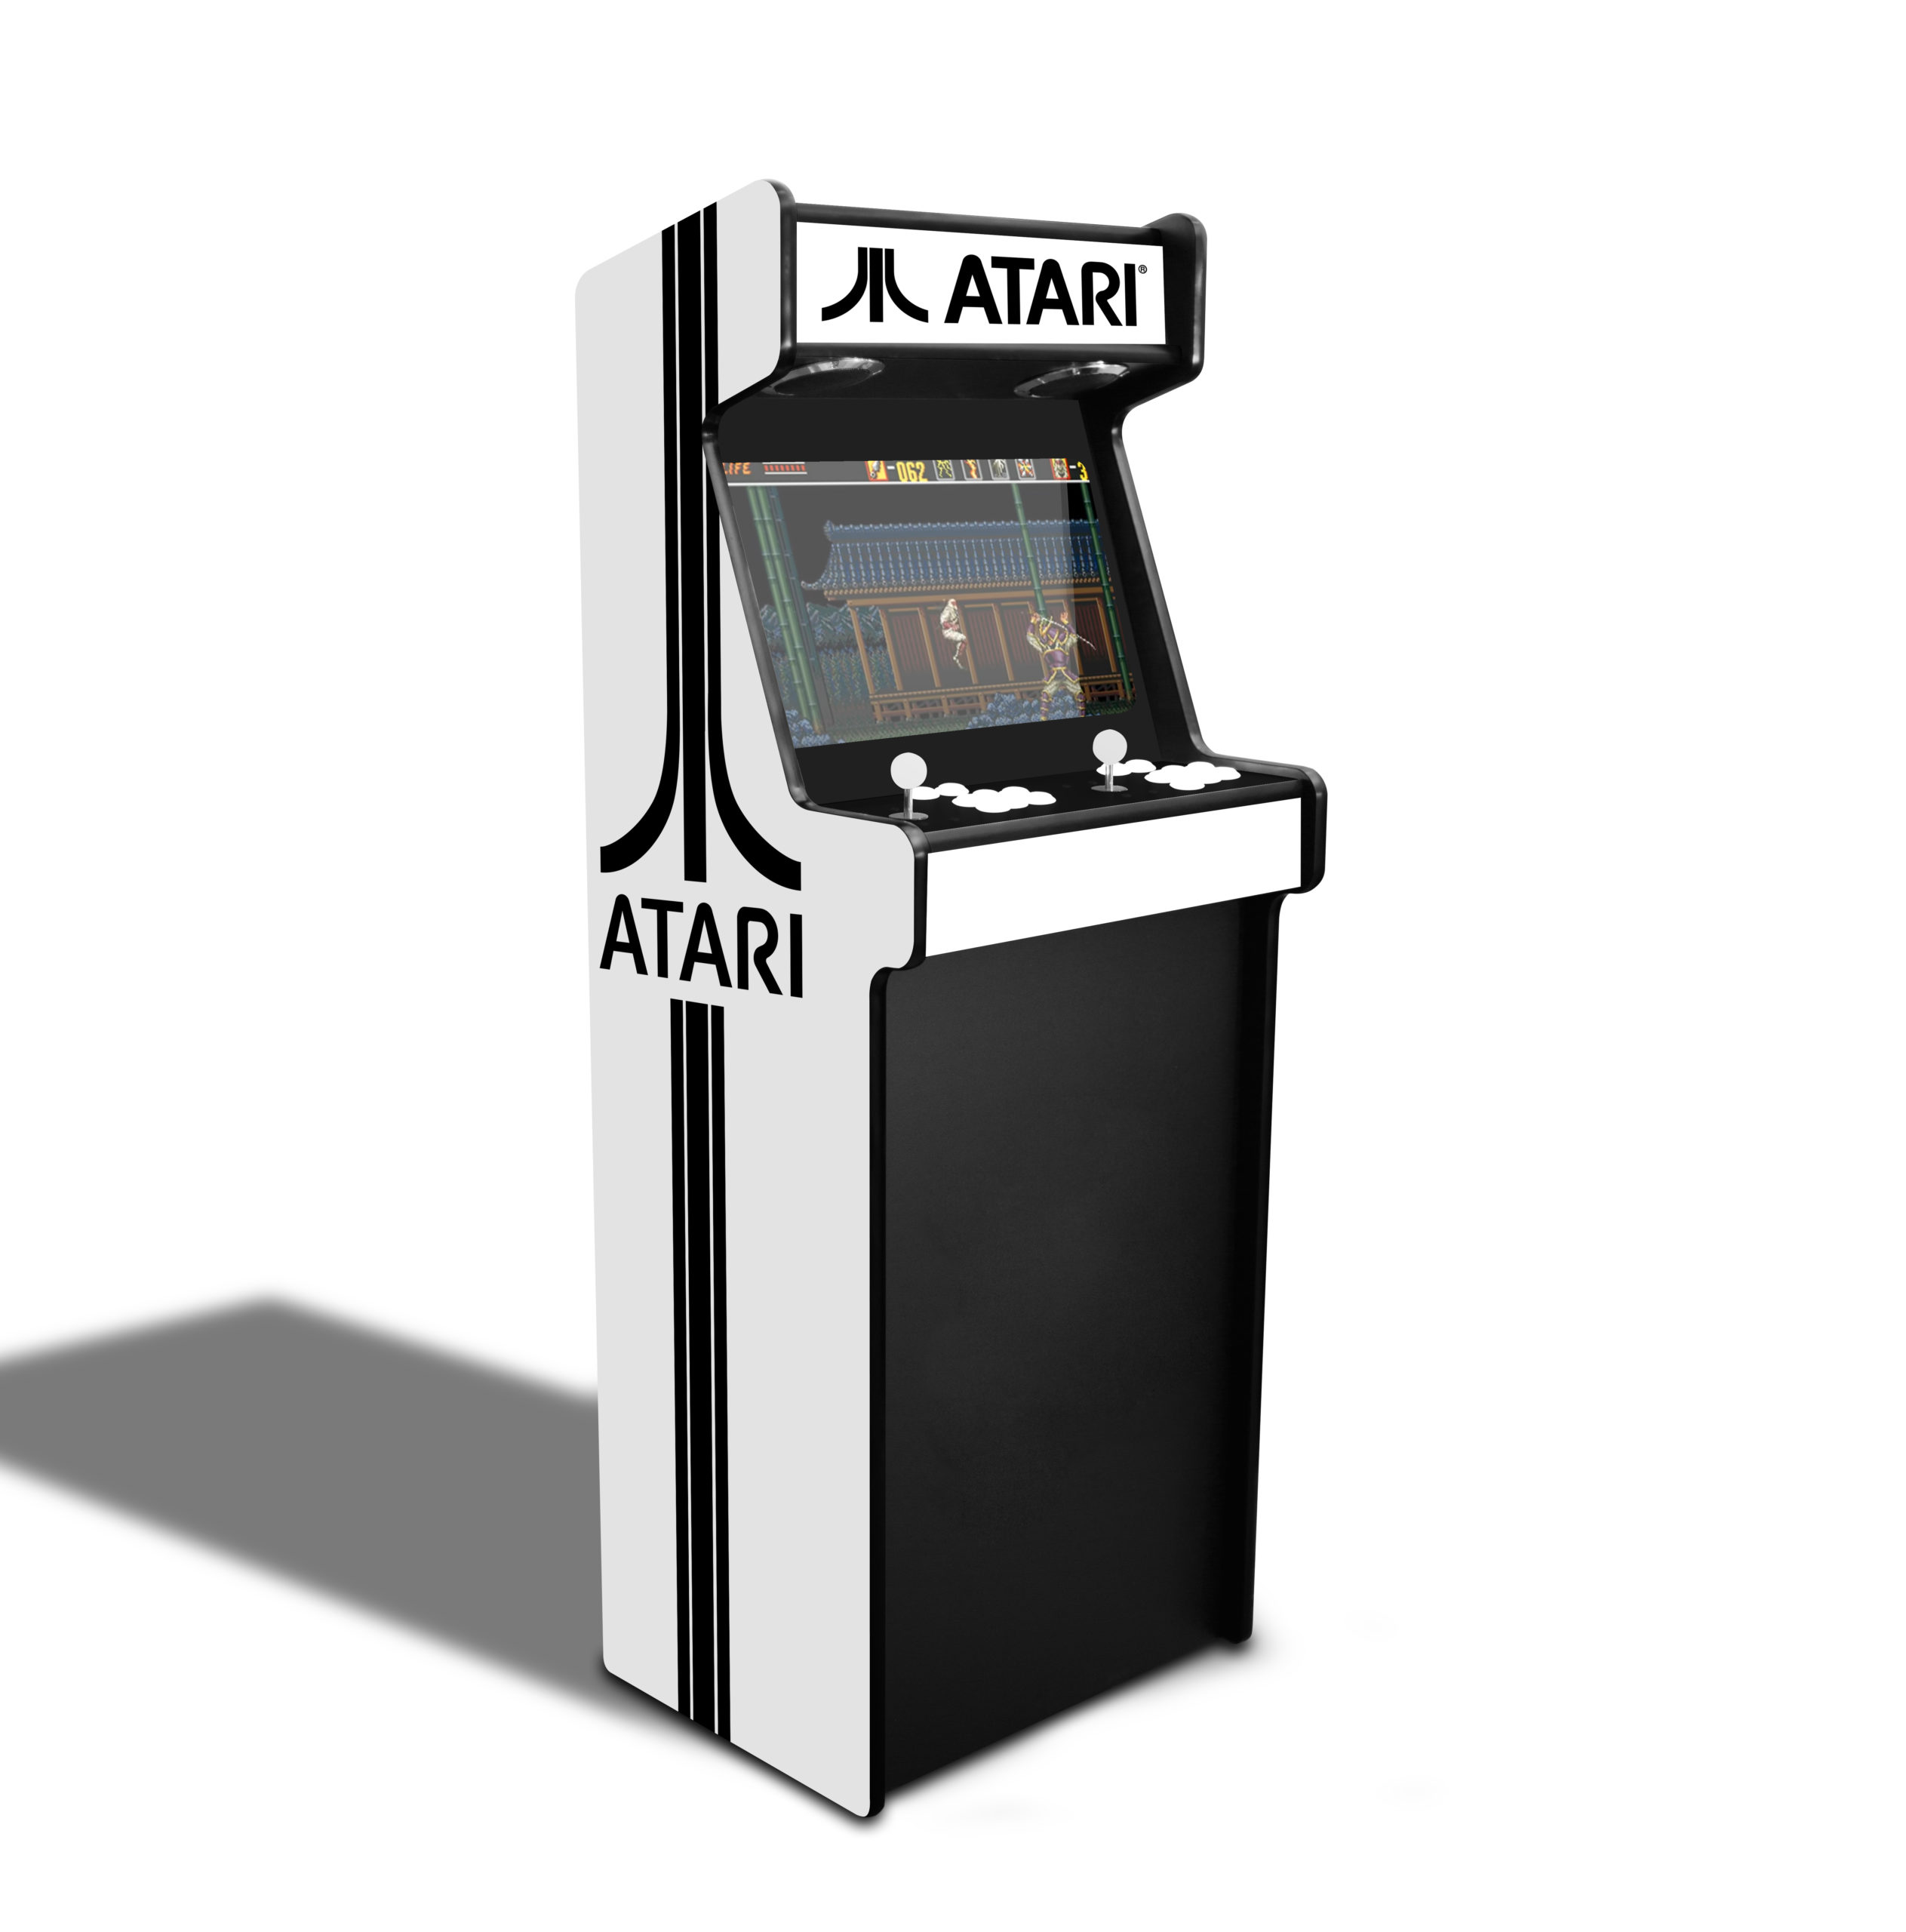 Borne d'arcade Atari - Retrozap - Jusqu'à 100 000 jeux